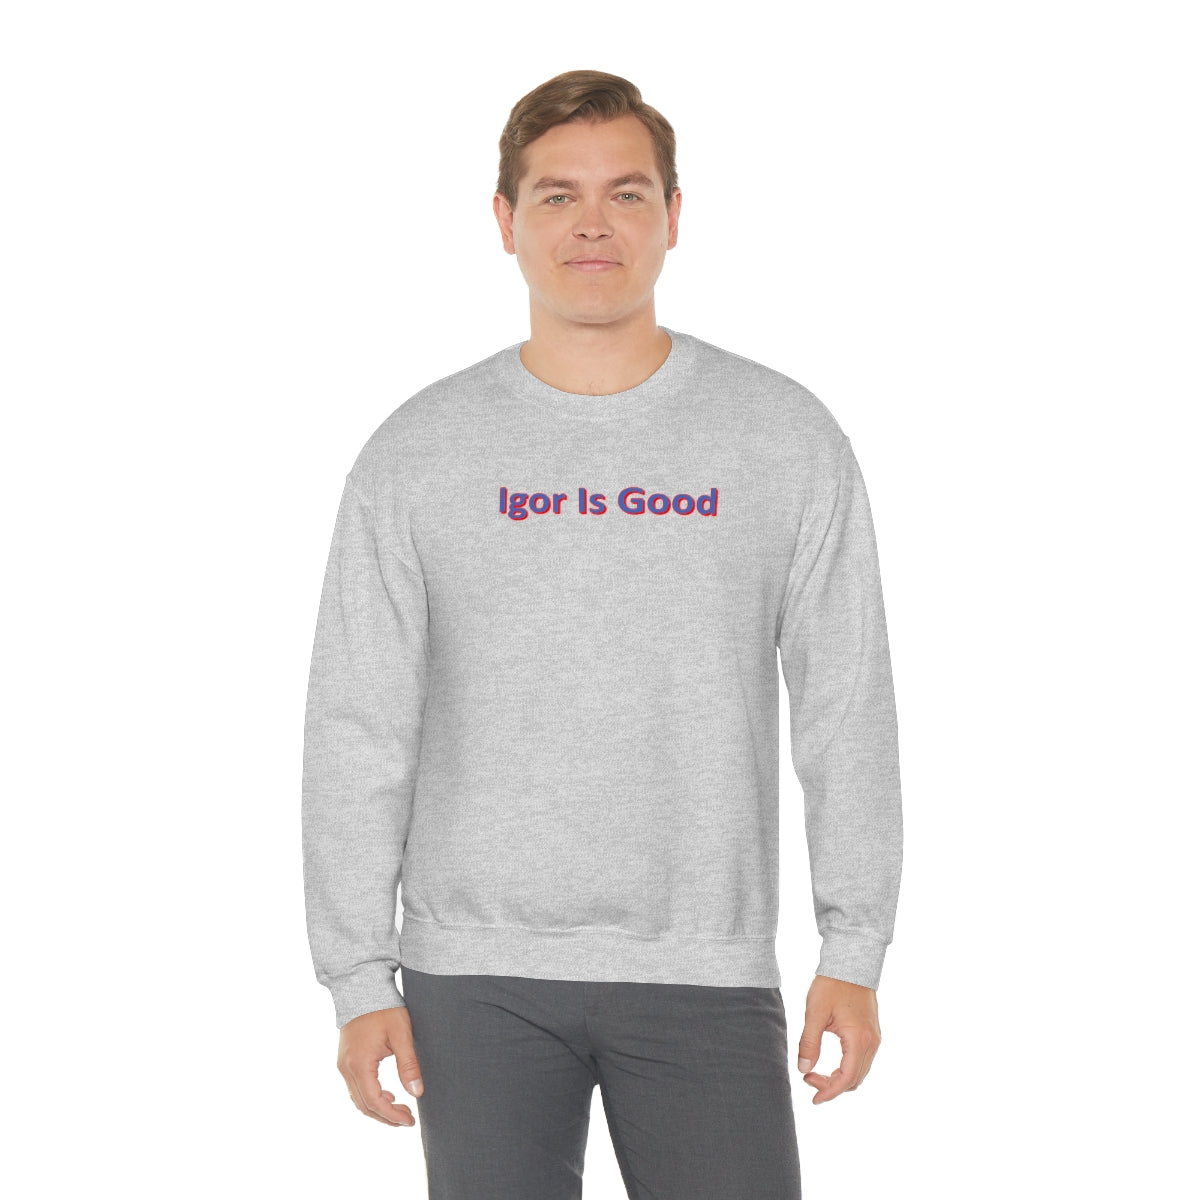 Igor Is Good  Sweater - IsGoodBrand